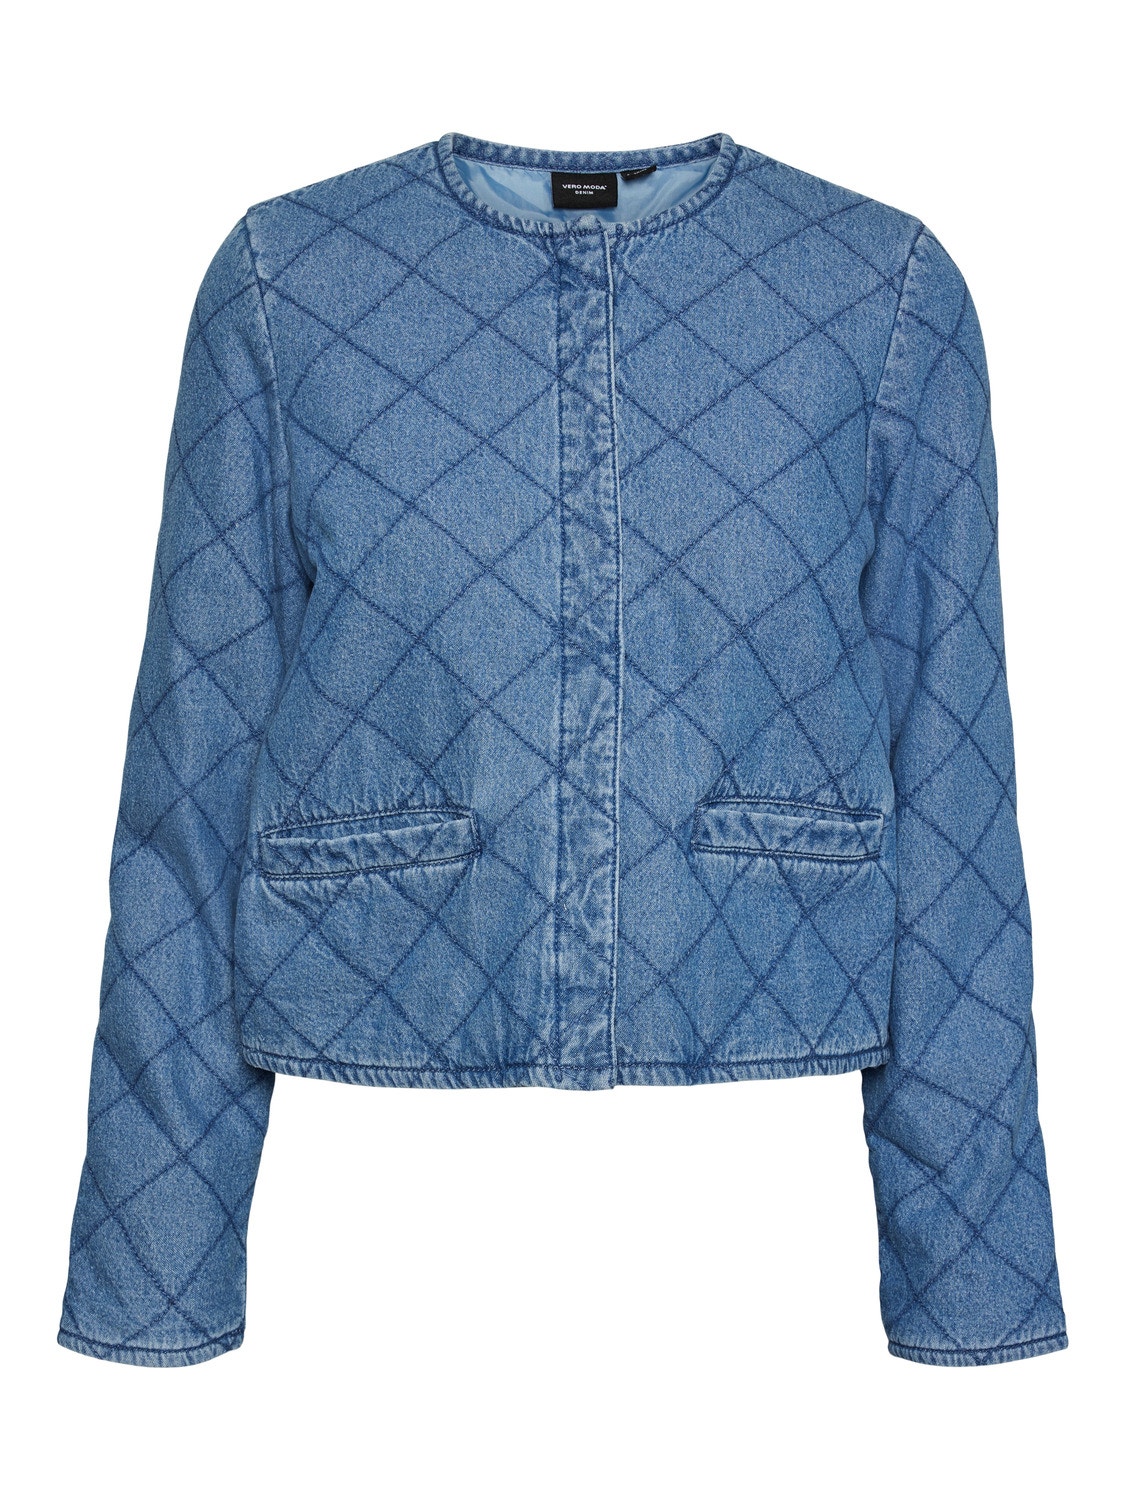 Vero Moda VMOLIVE Denim jacket -Medium Blue Denim - 10308430